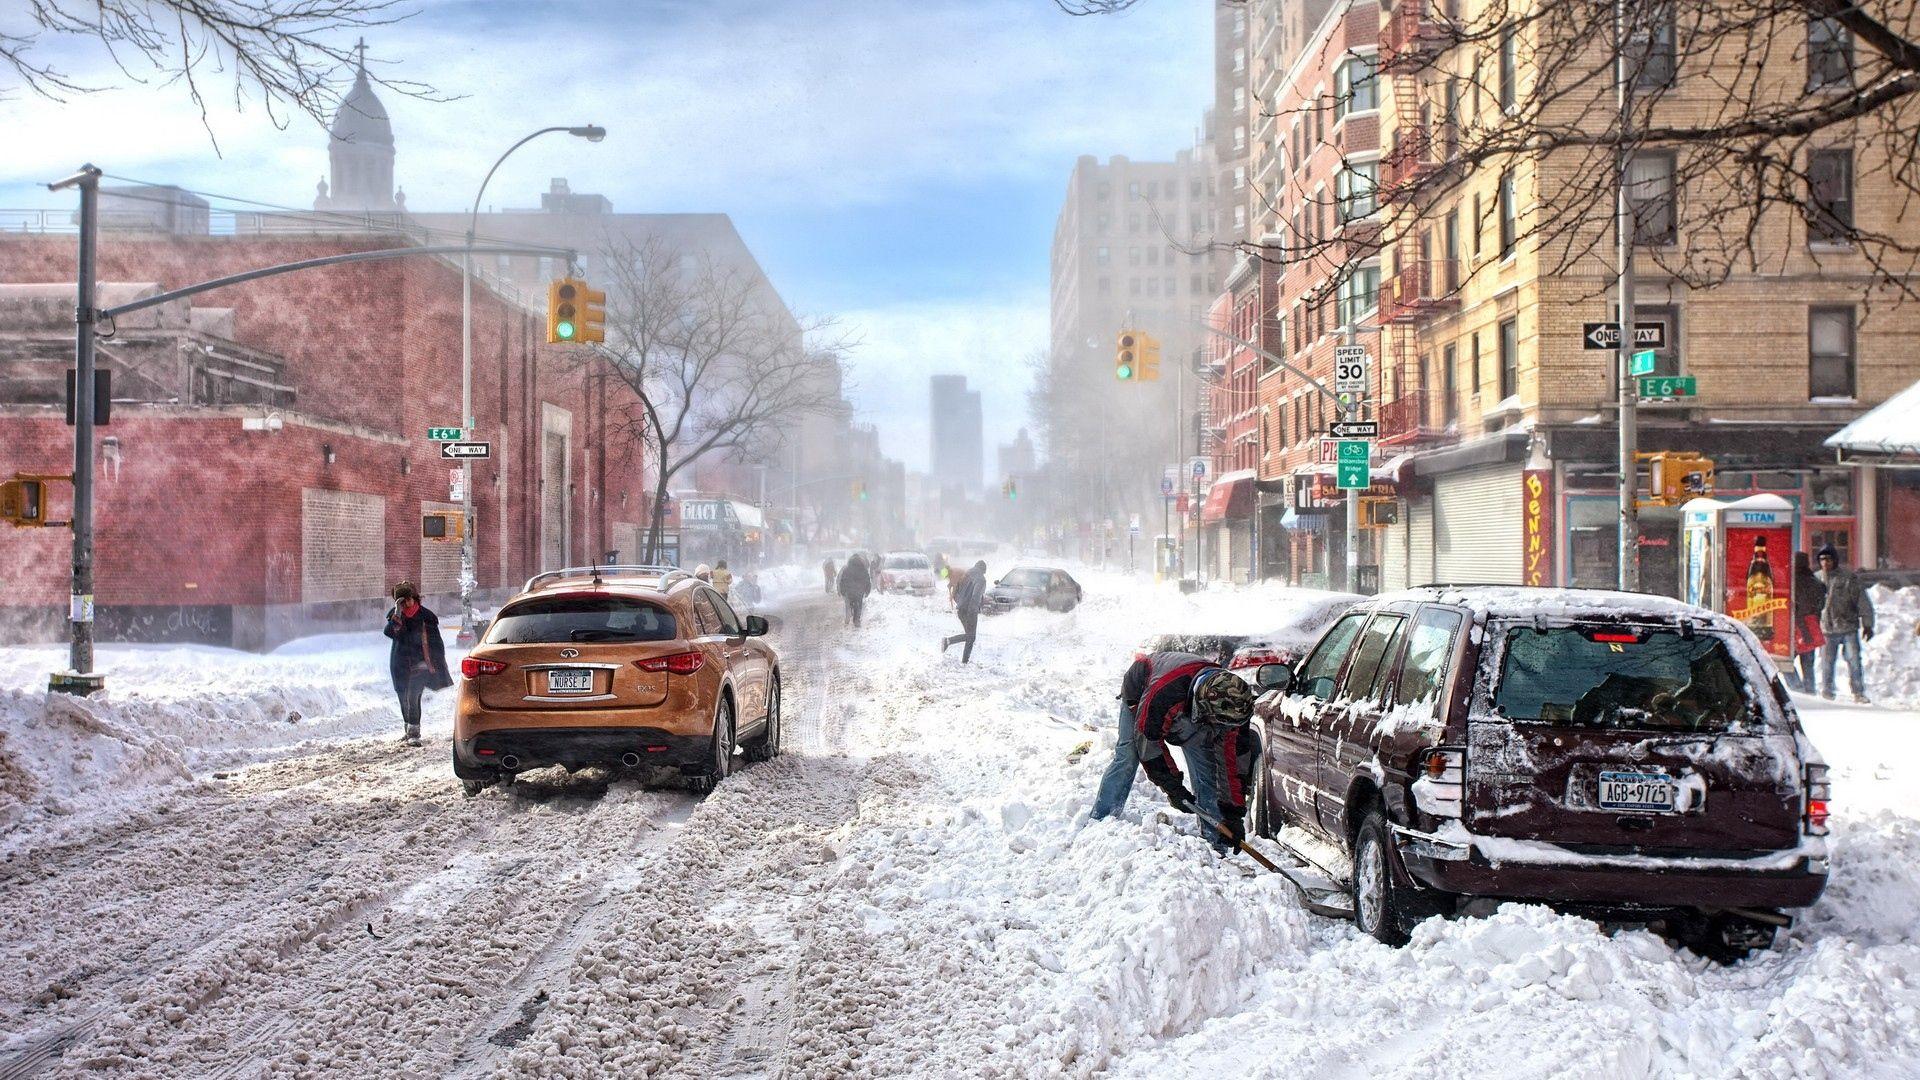 Download wallpaper 1920x1080 new york, winter, snow, cars, street HD